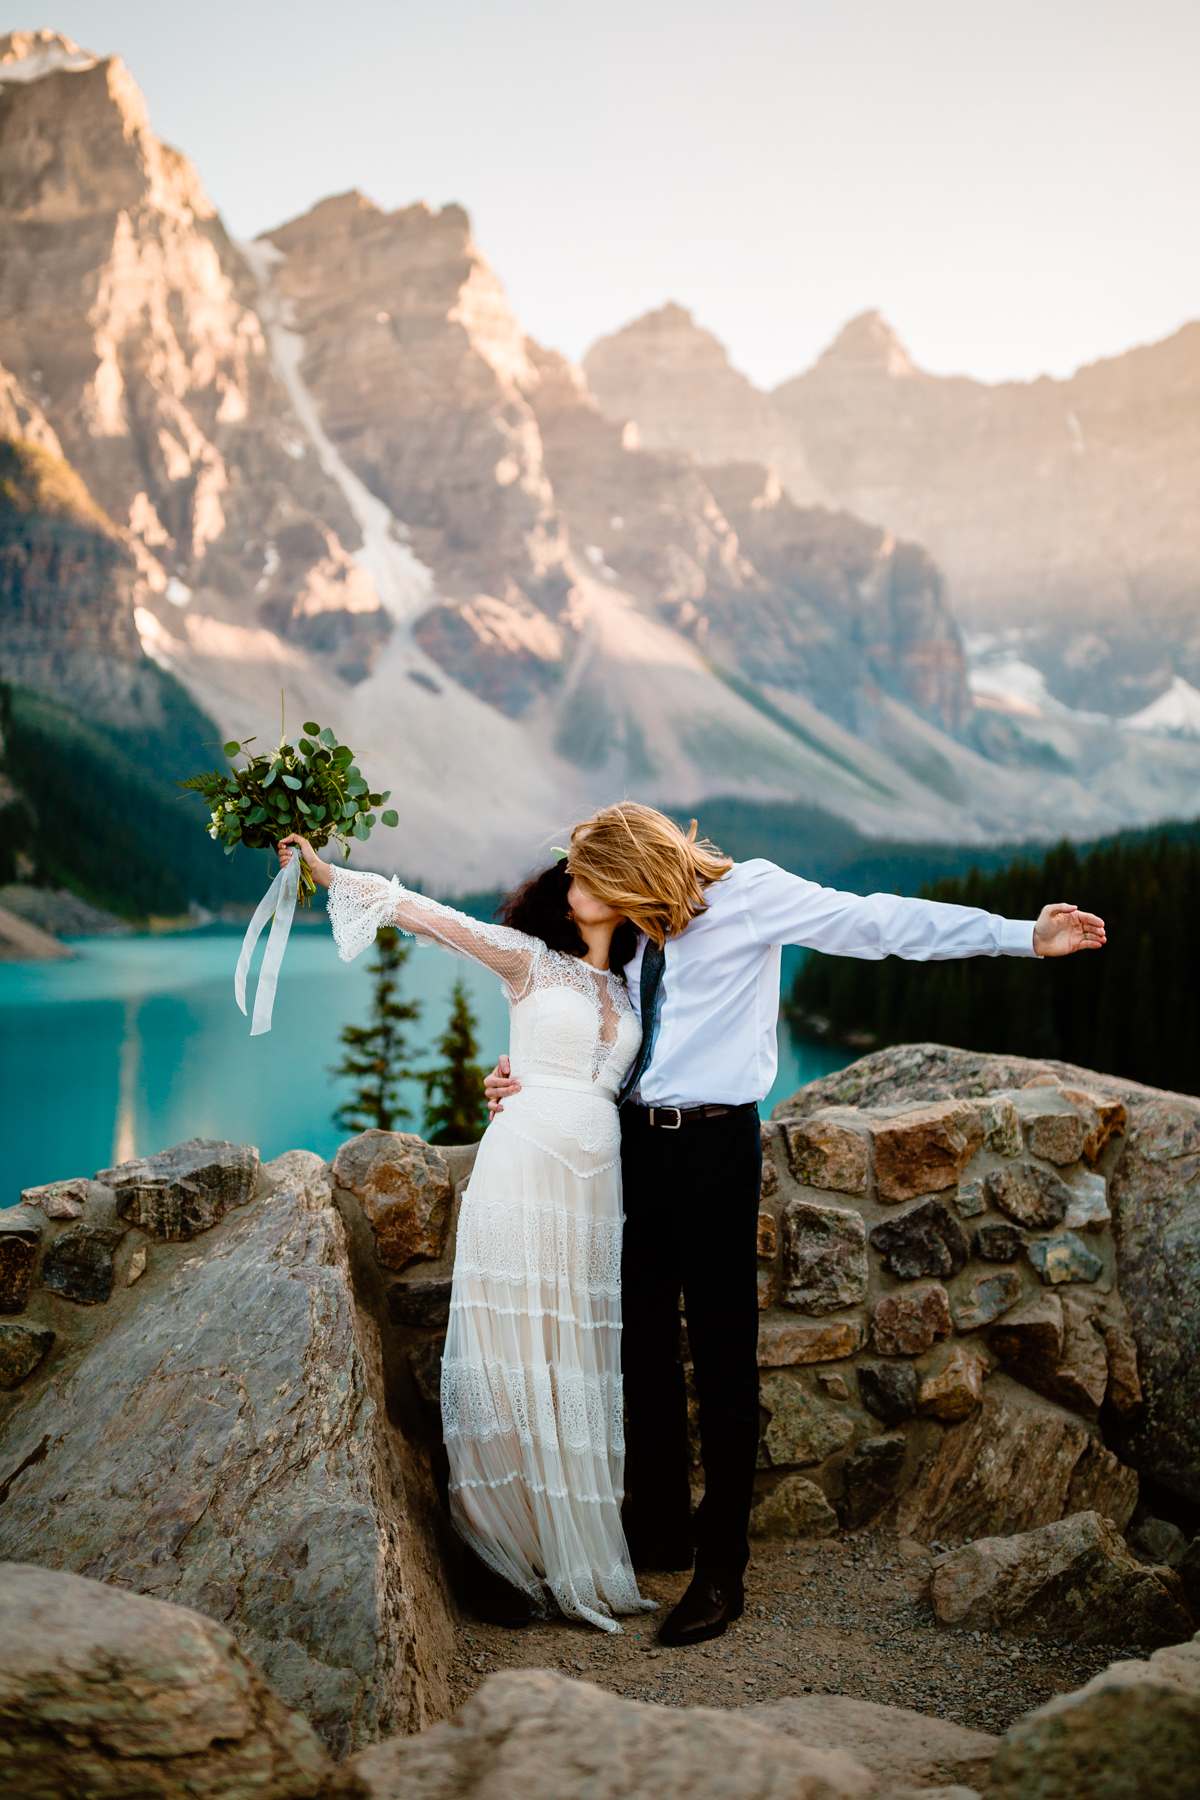 Banff Photographers at a Moraine Lake Post-Wedding Adventure Session - Photo 23